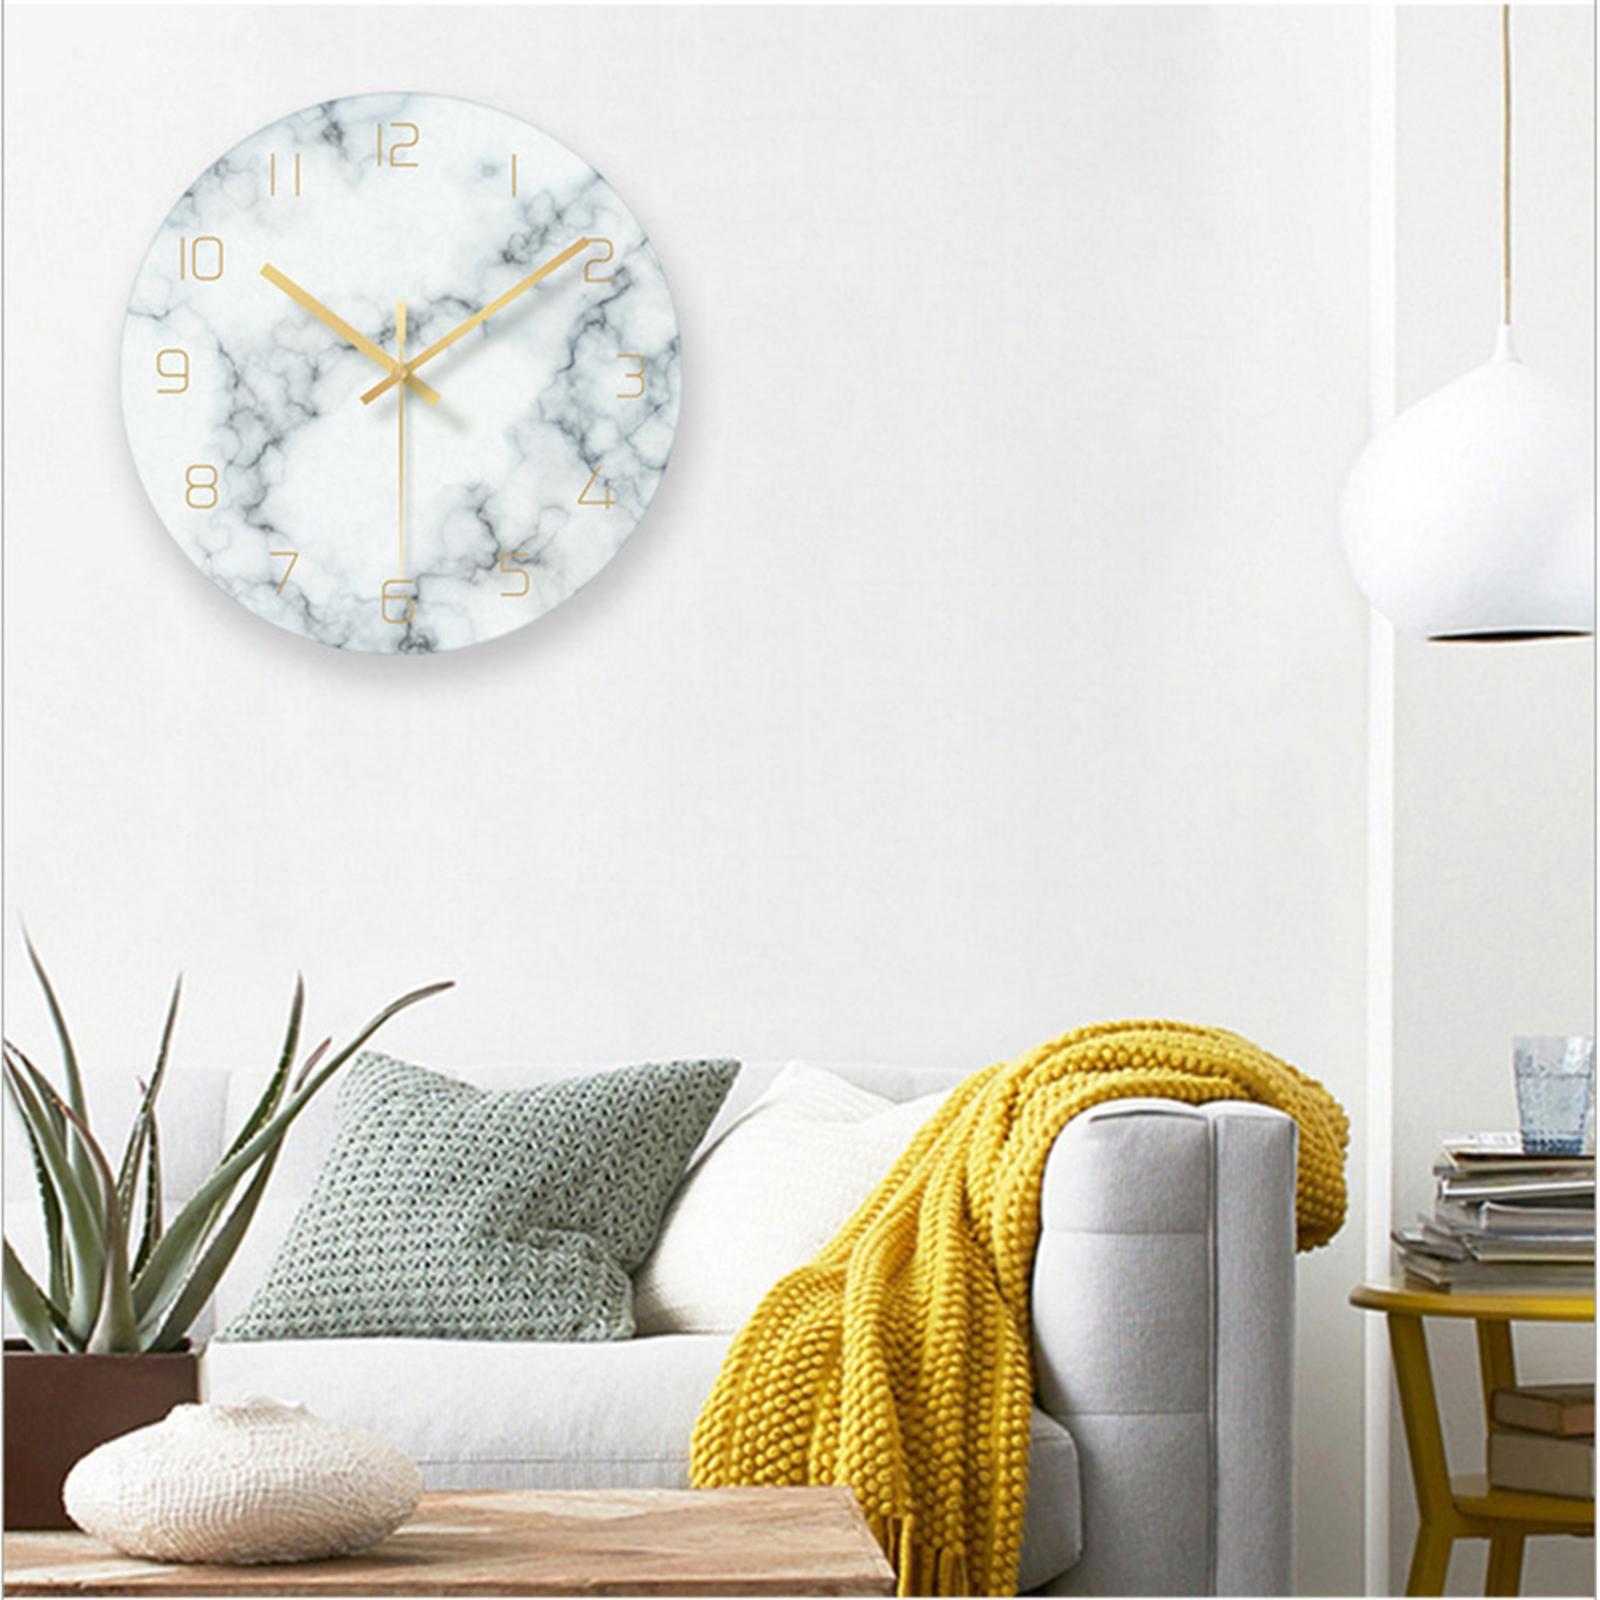 Wall Clock Silent Non-ticking 12 inch Decorative Blue White